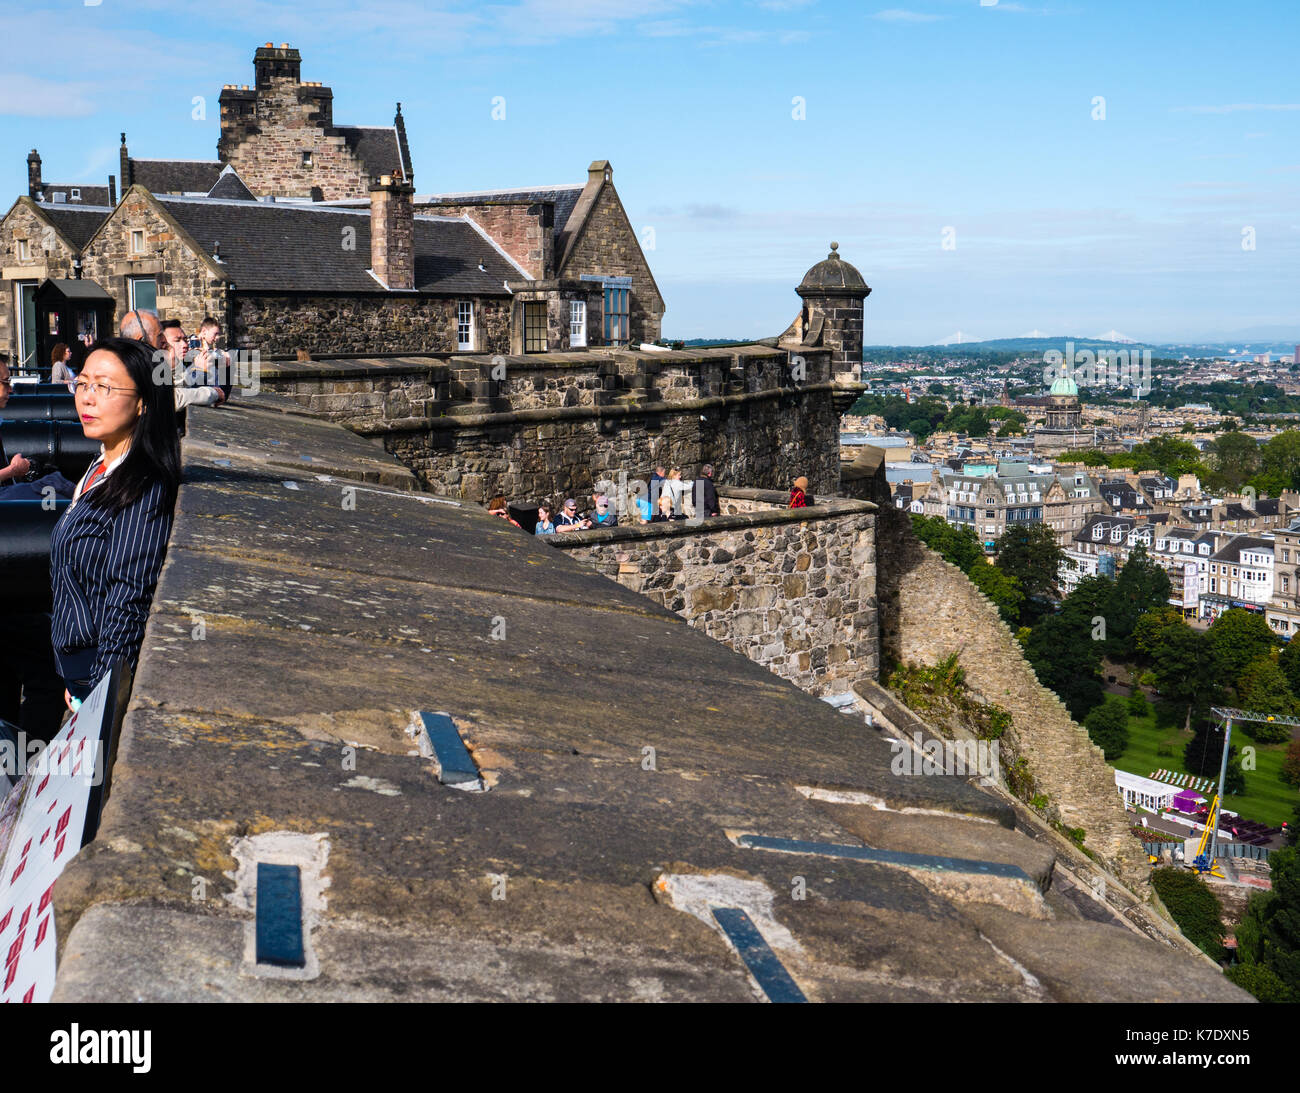 Tourists of Battlements of Edinburgh Castle, Castle Rock, Old Town, Edinburgh, Scotland, UK,GB. Stock Photo